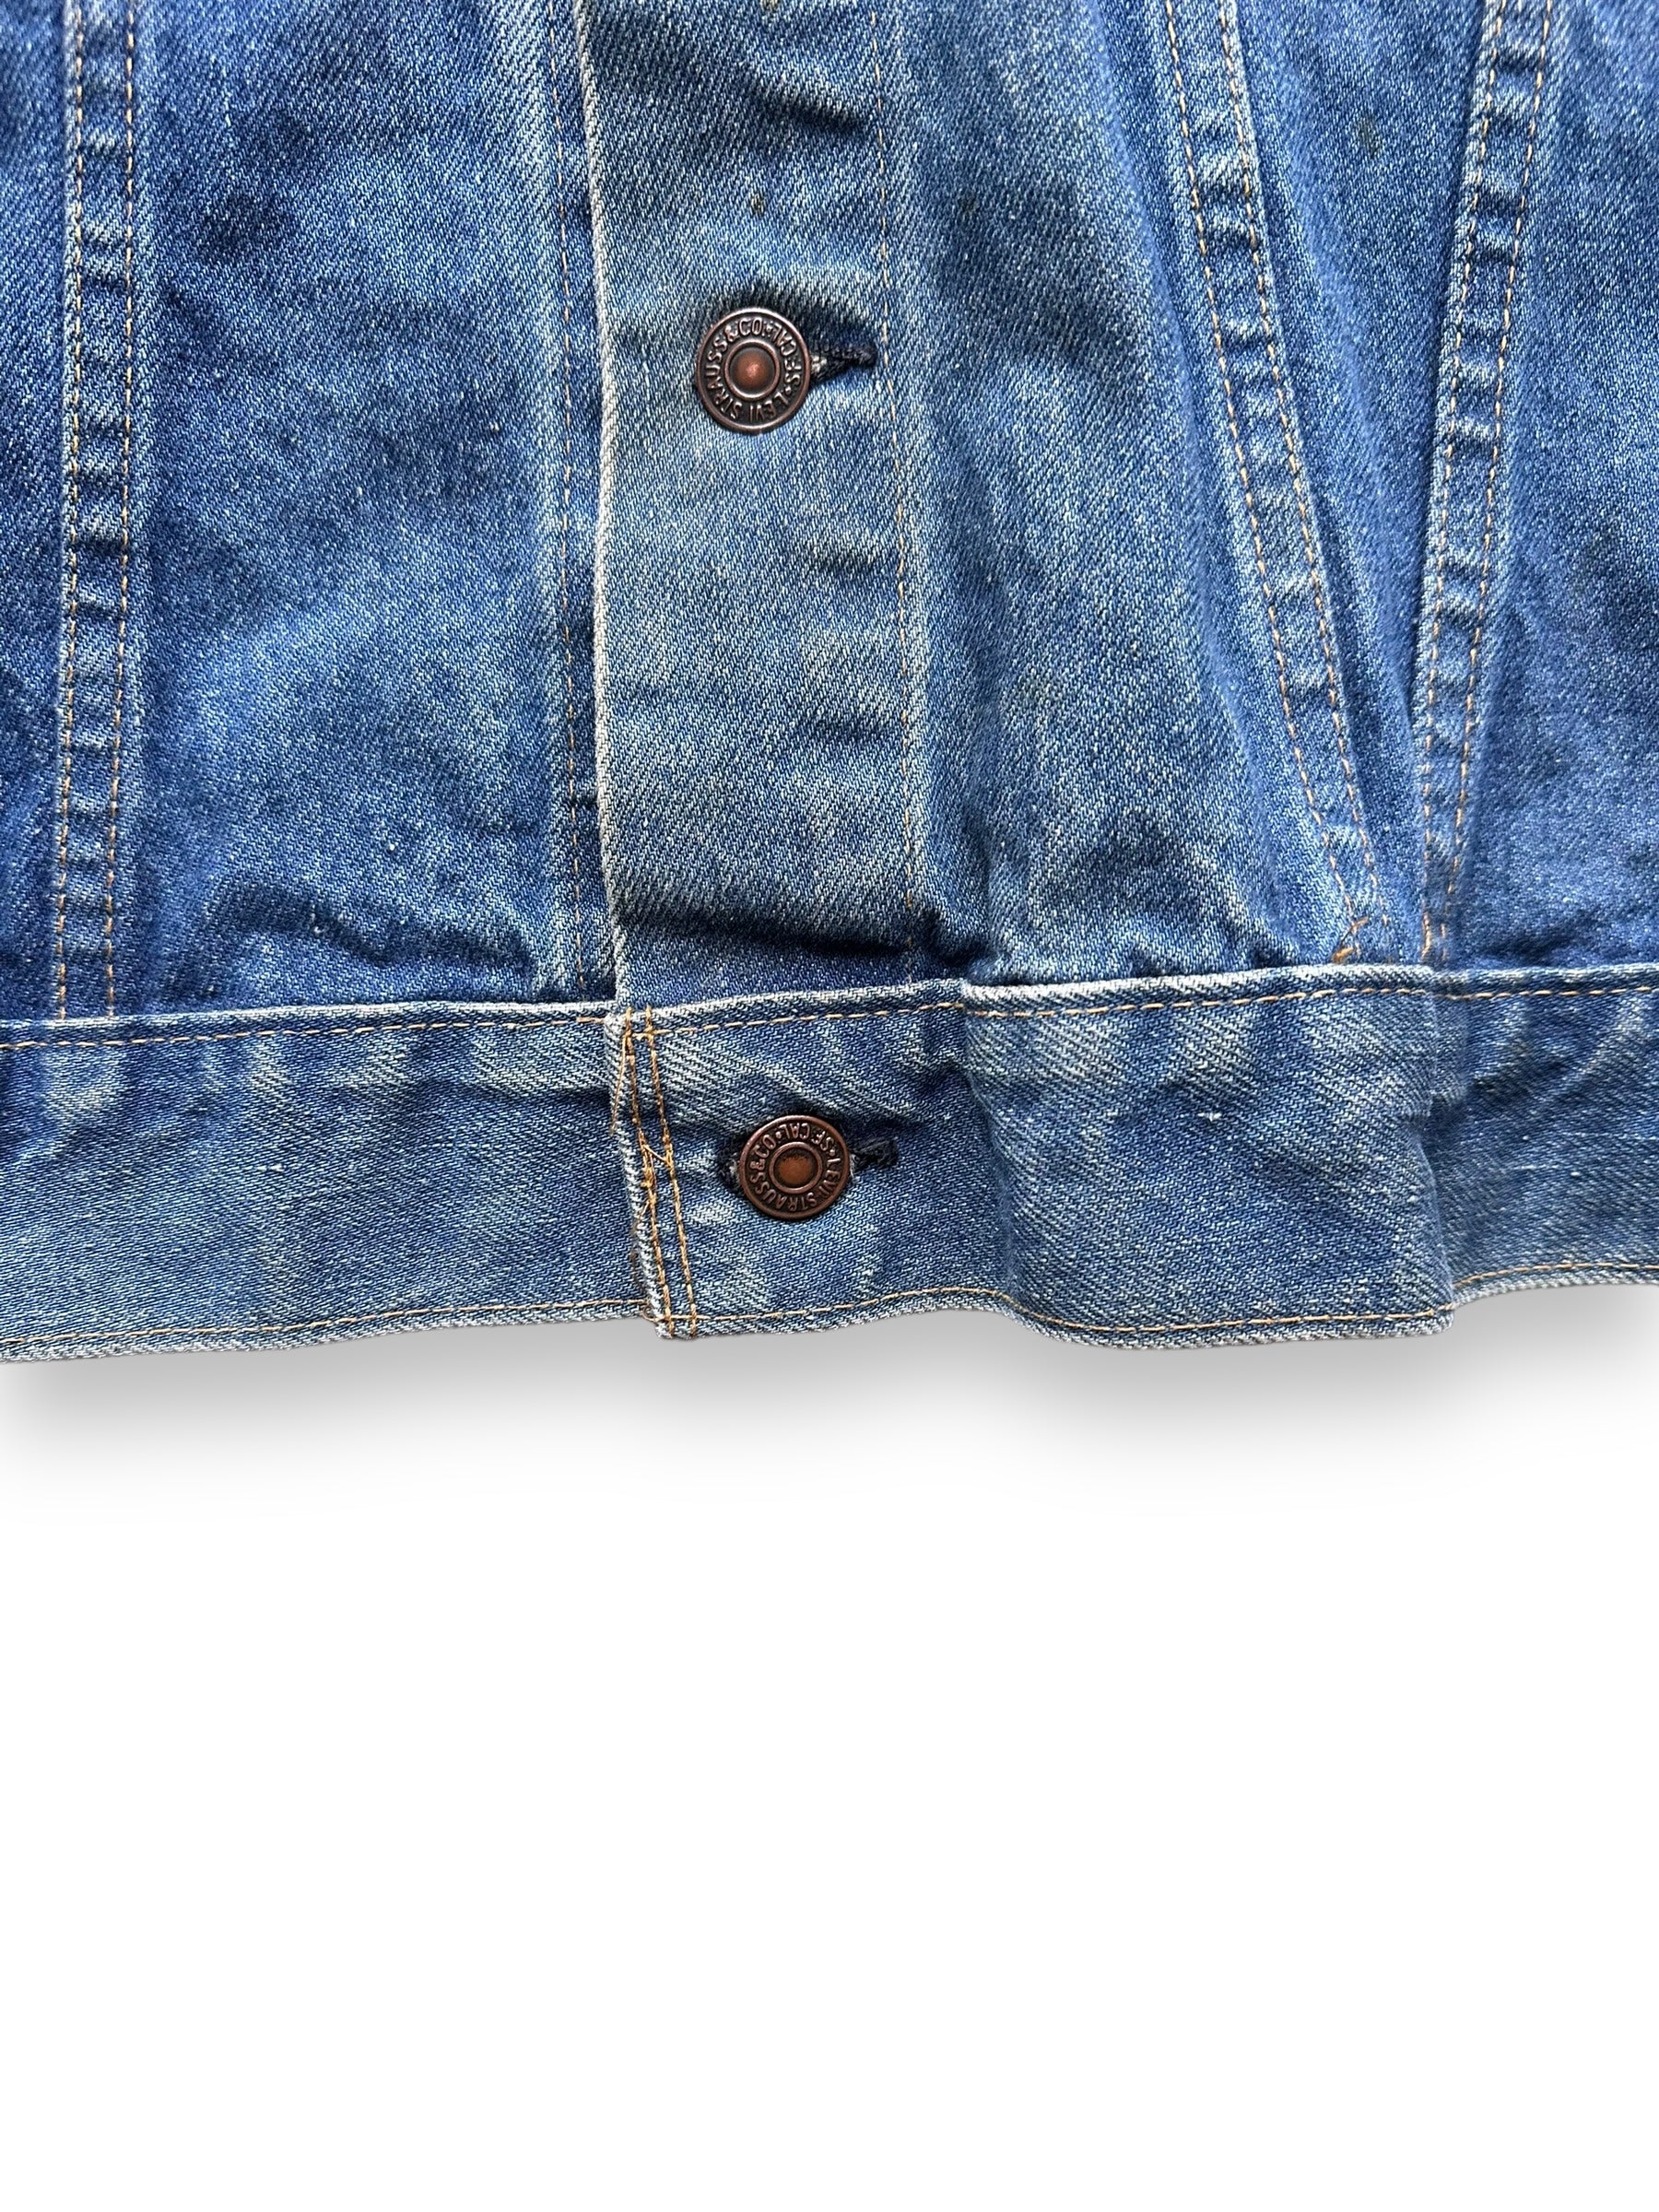 Lower Clasp View of Vintage 2-Pocket Levi's Type III Denim Jacket SZ 42 | Vintage Denim Workwear Seattle | Seattle Vintage Denim